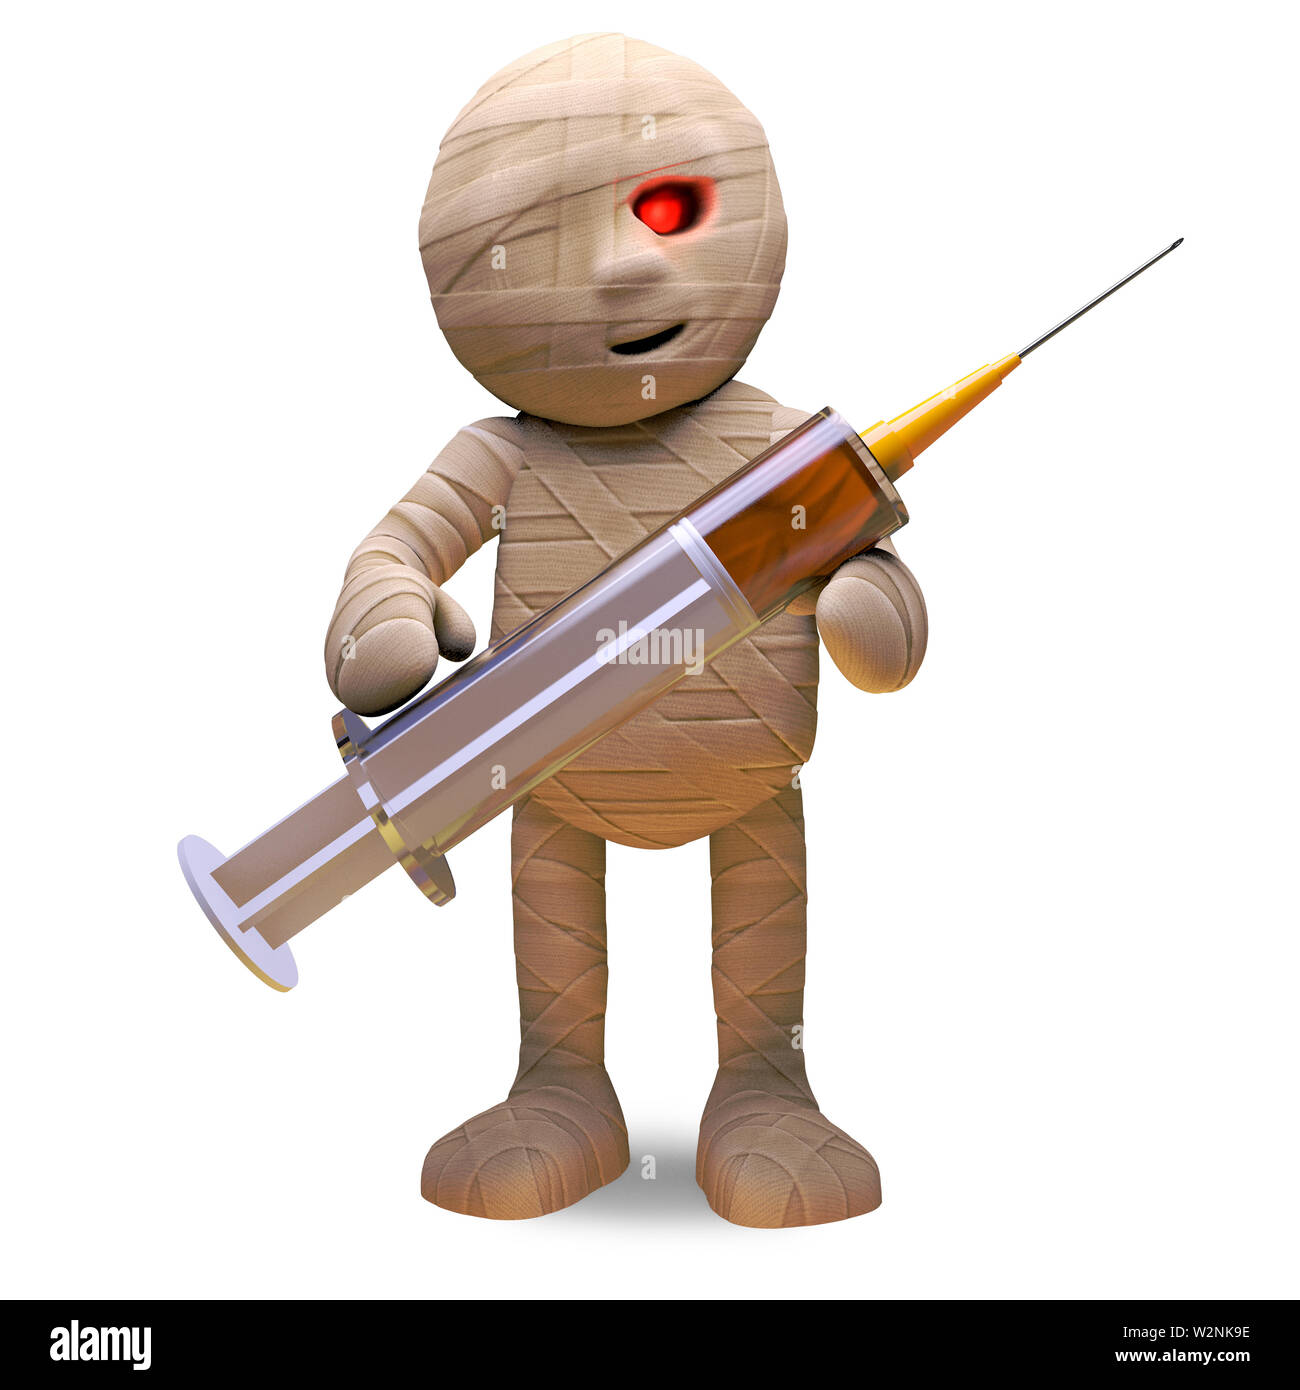 Medically minded Egyptian mummy monster holds a medical syringe, 3d illustration render Stock Photo